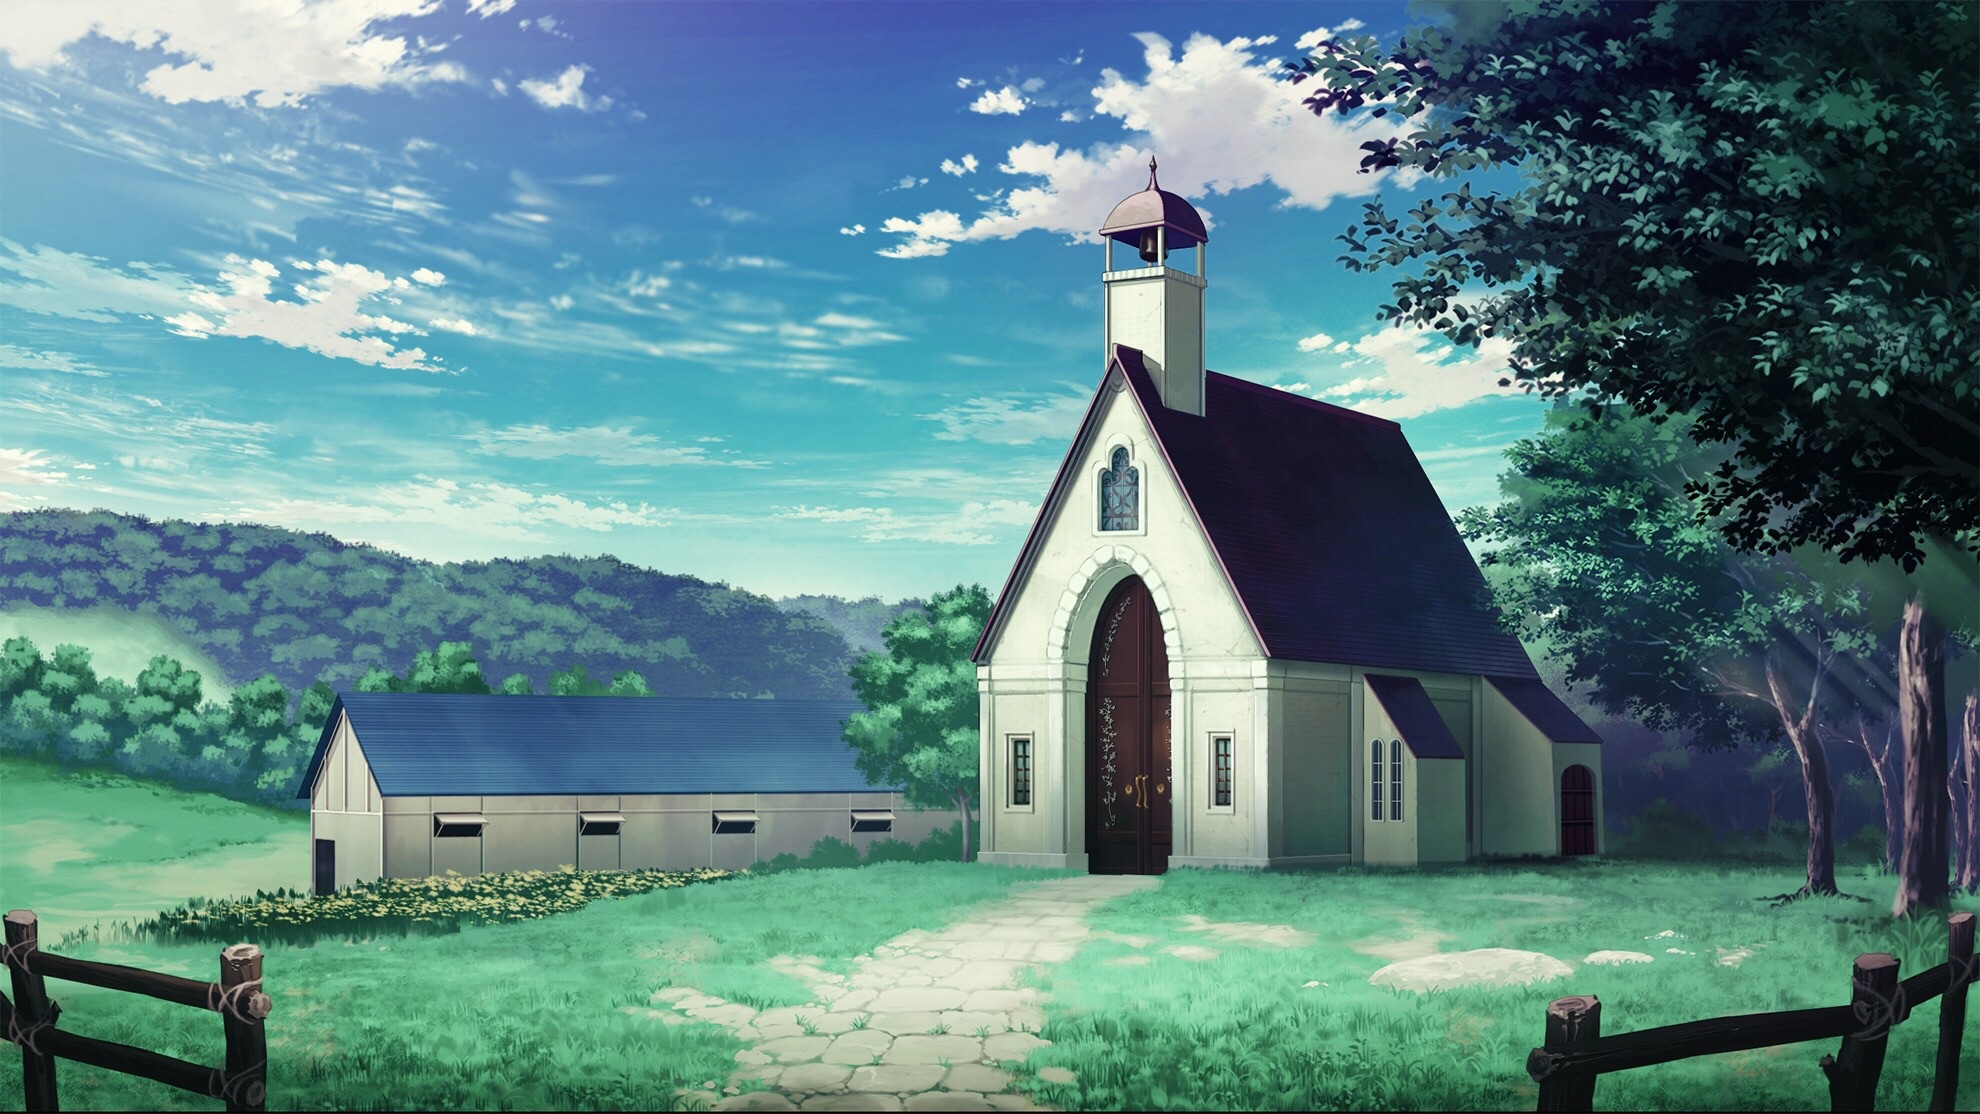 Stylish Church Anime Backgrounds Web Graphics Stock Illustration 2211139851   Shutterstock